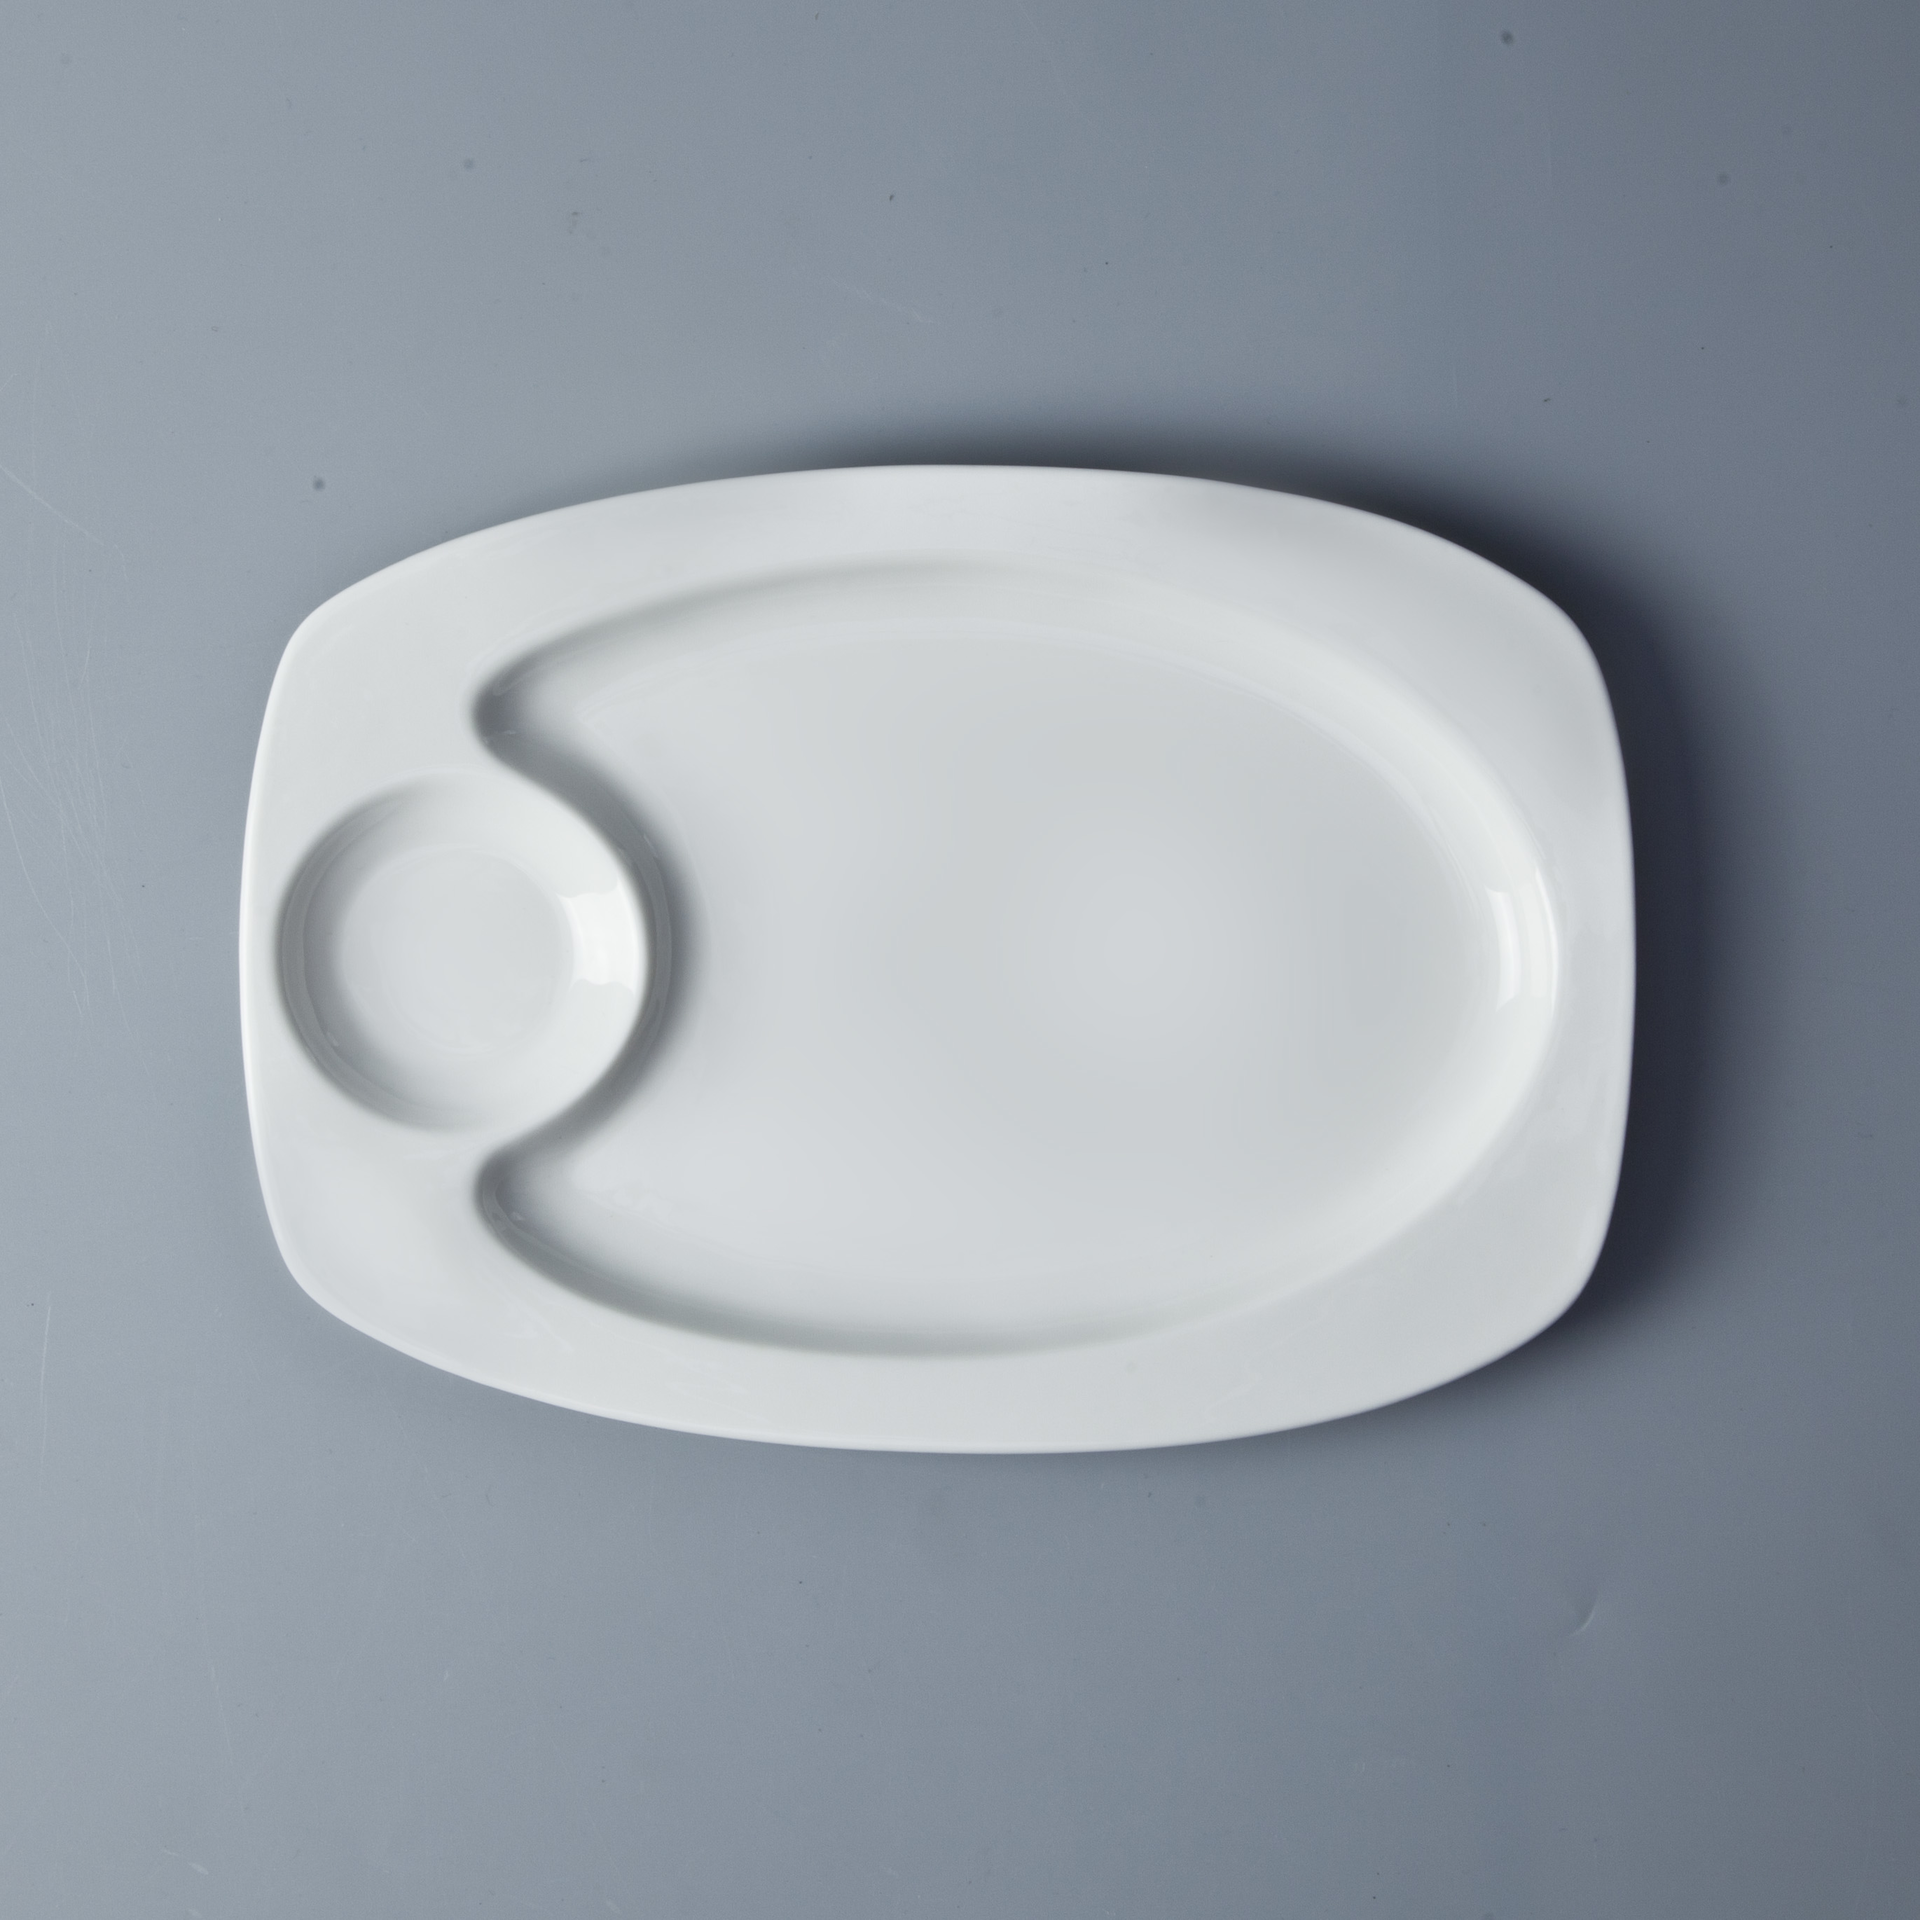 modern restaurant porcelain retangular plate with round well